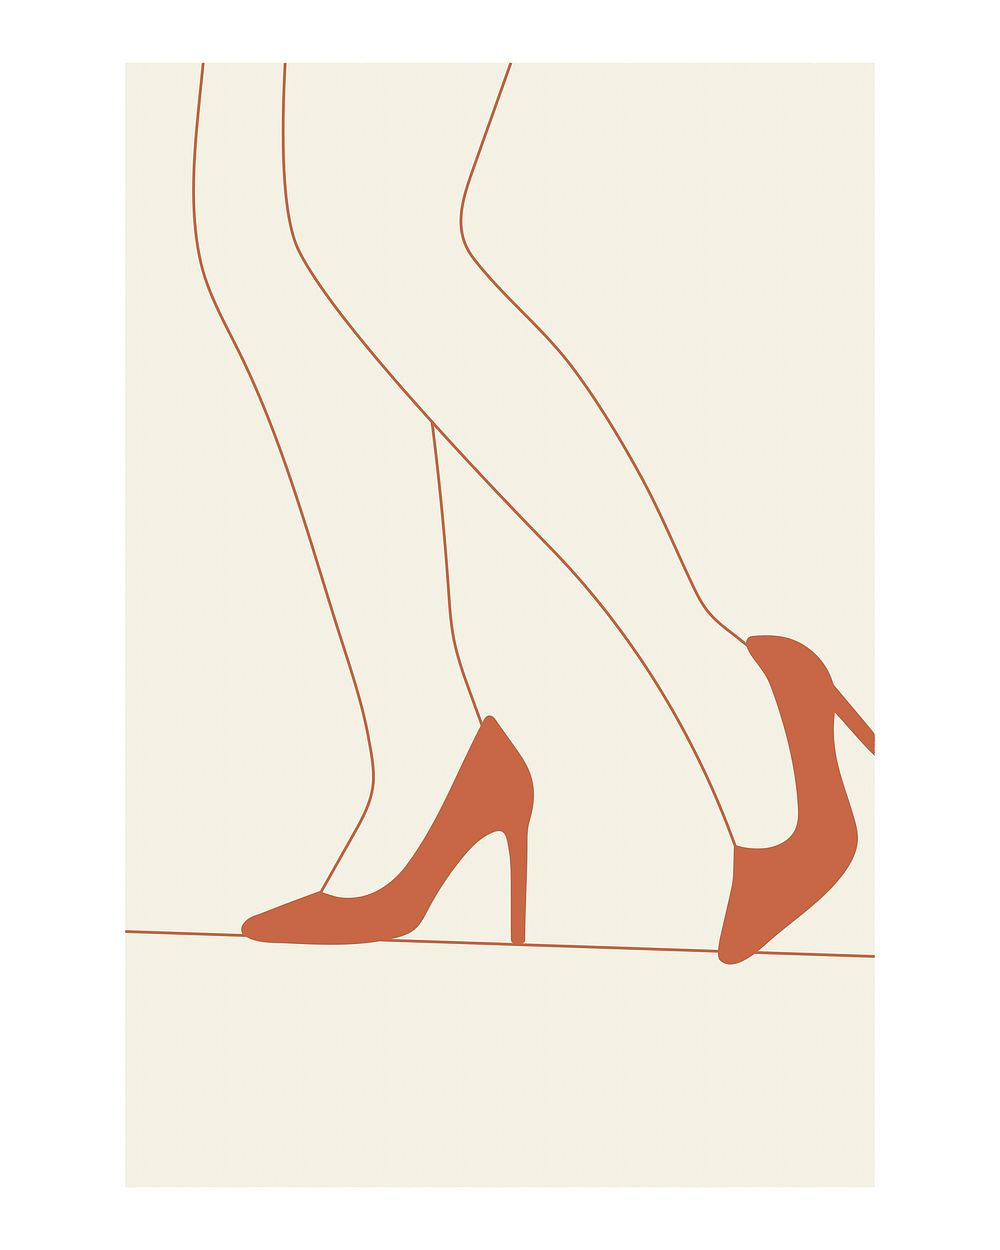 Heels art print, women's legs wall decor